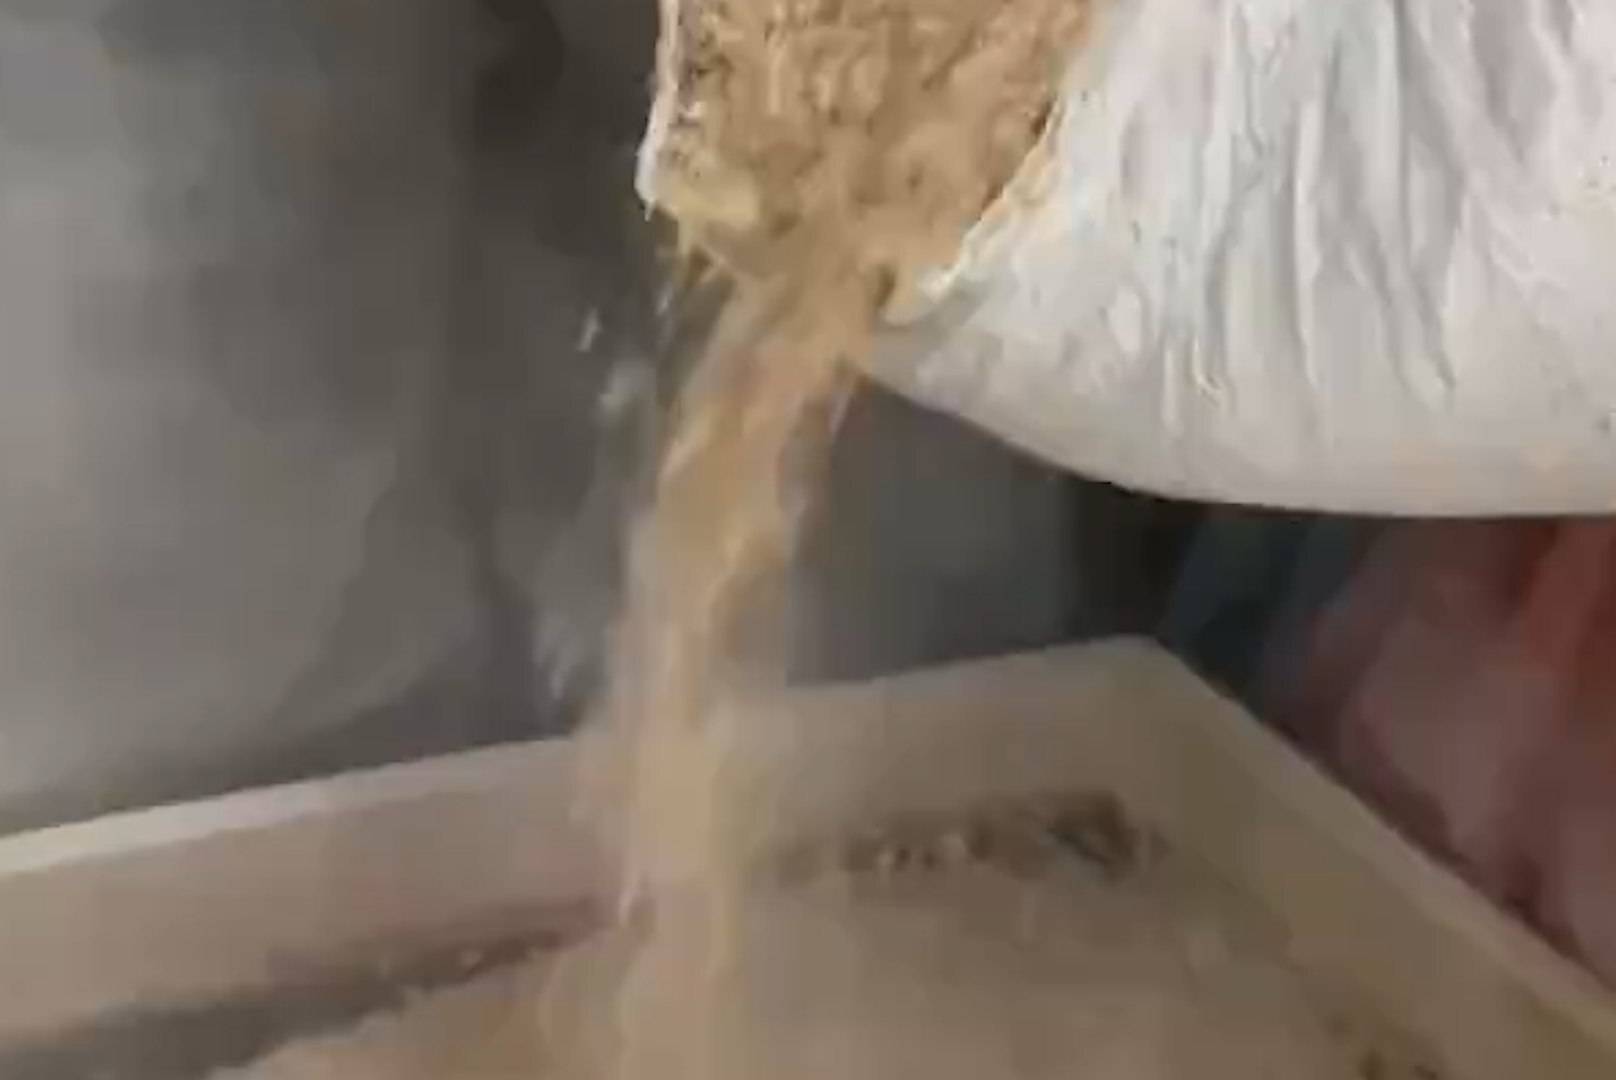 Palestinians use animal feed amid flour scarcity in Gaza